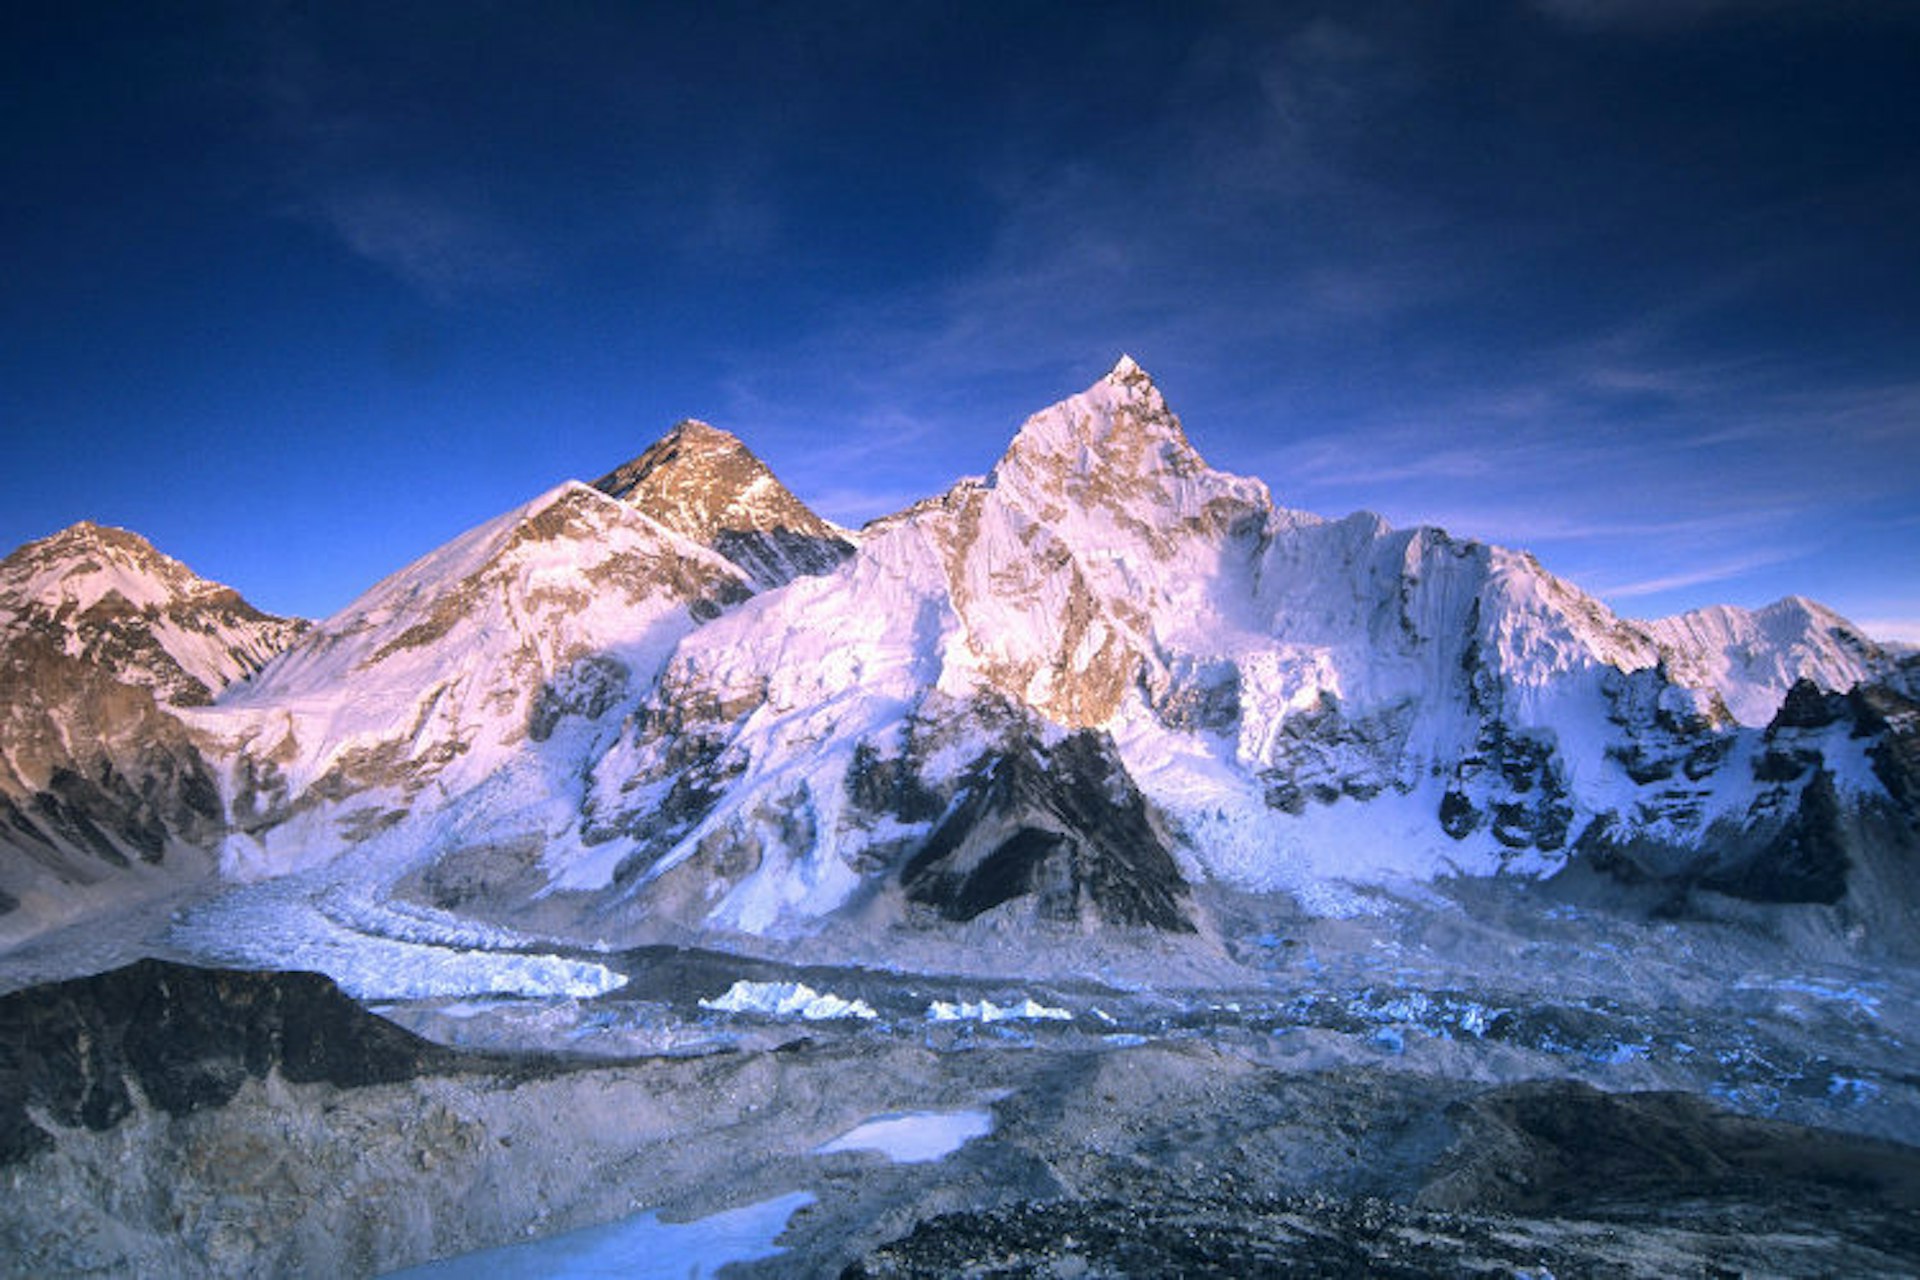 Mount Everest and the Khumbu Glacier in Sagarmatha National Park. Image by Dan Rafla / Getty Images. 